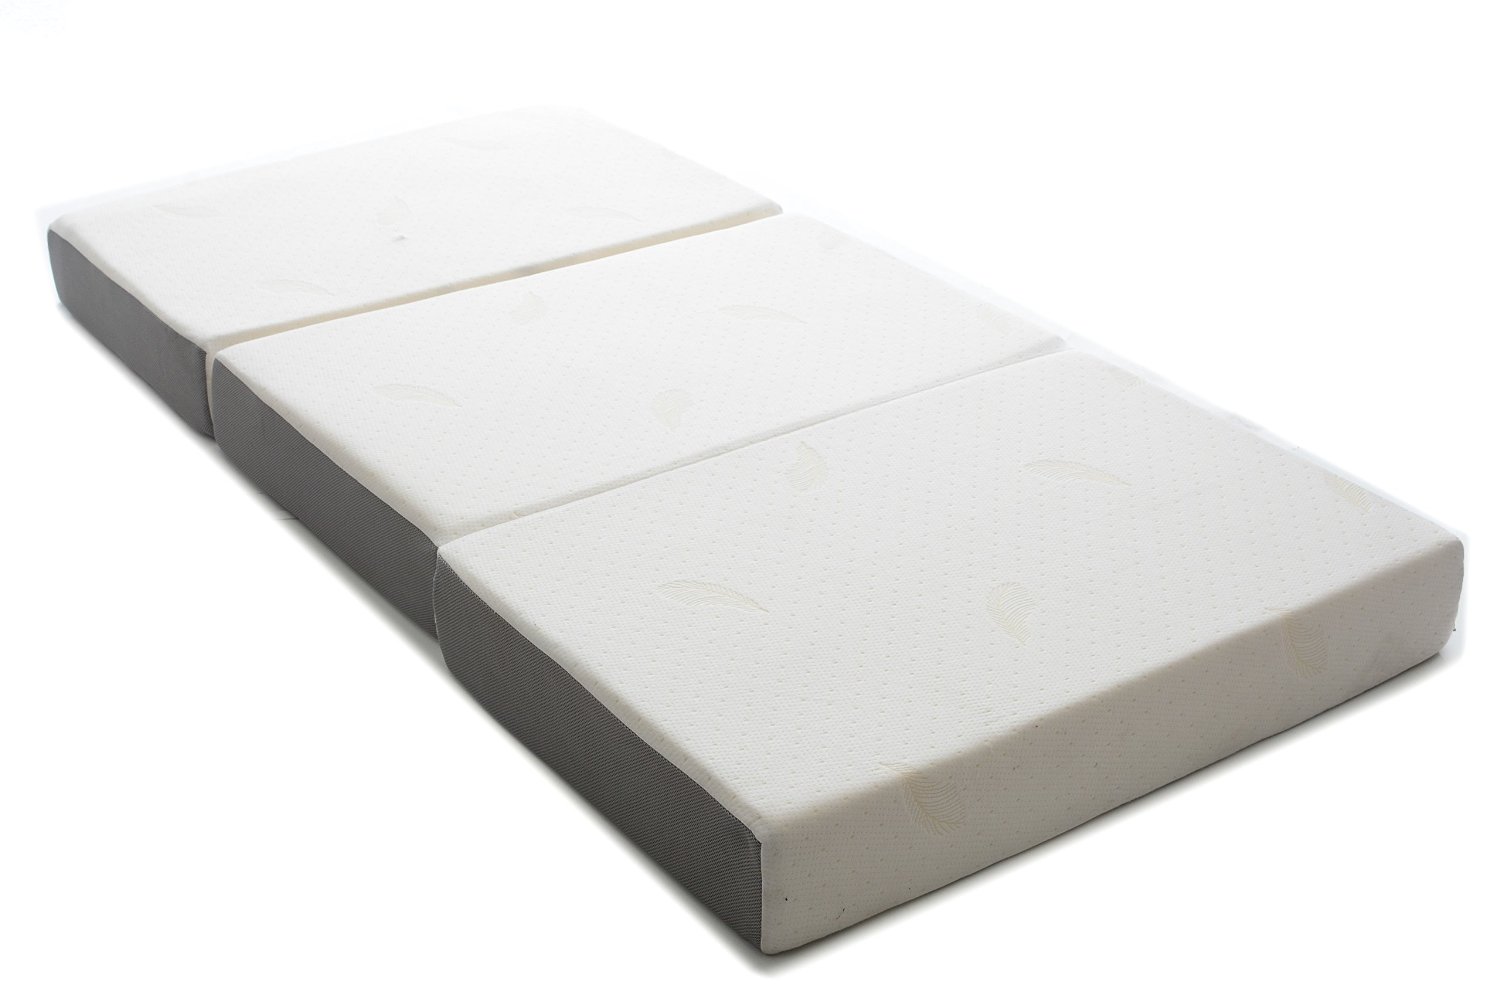 fold a foam mattress